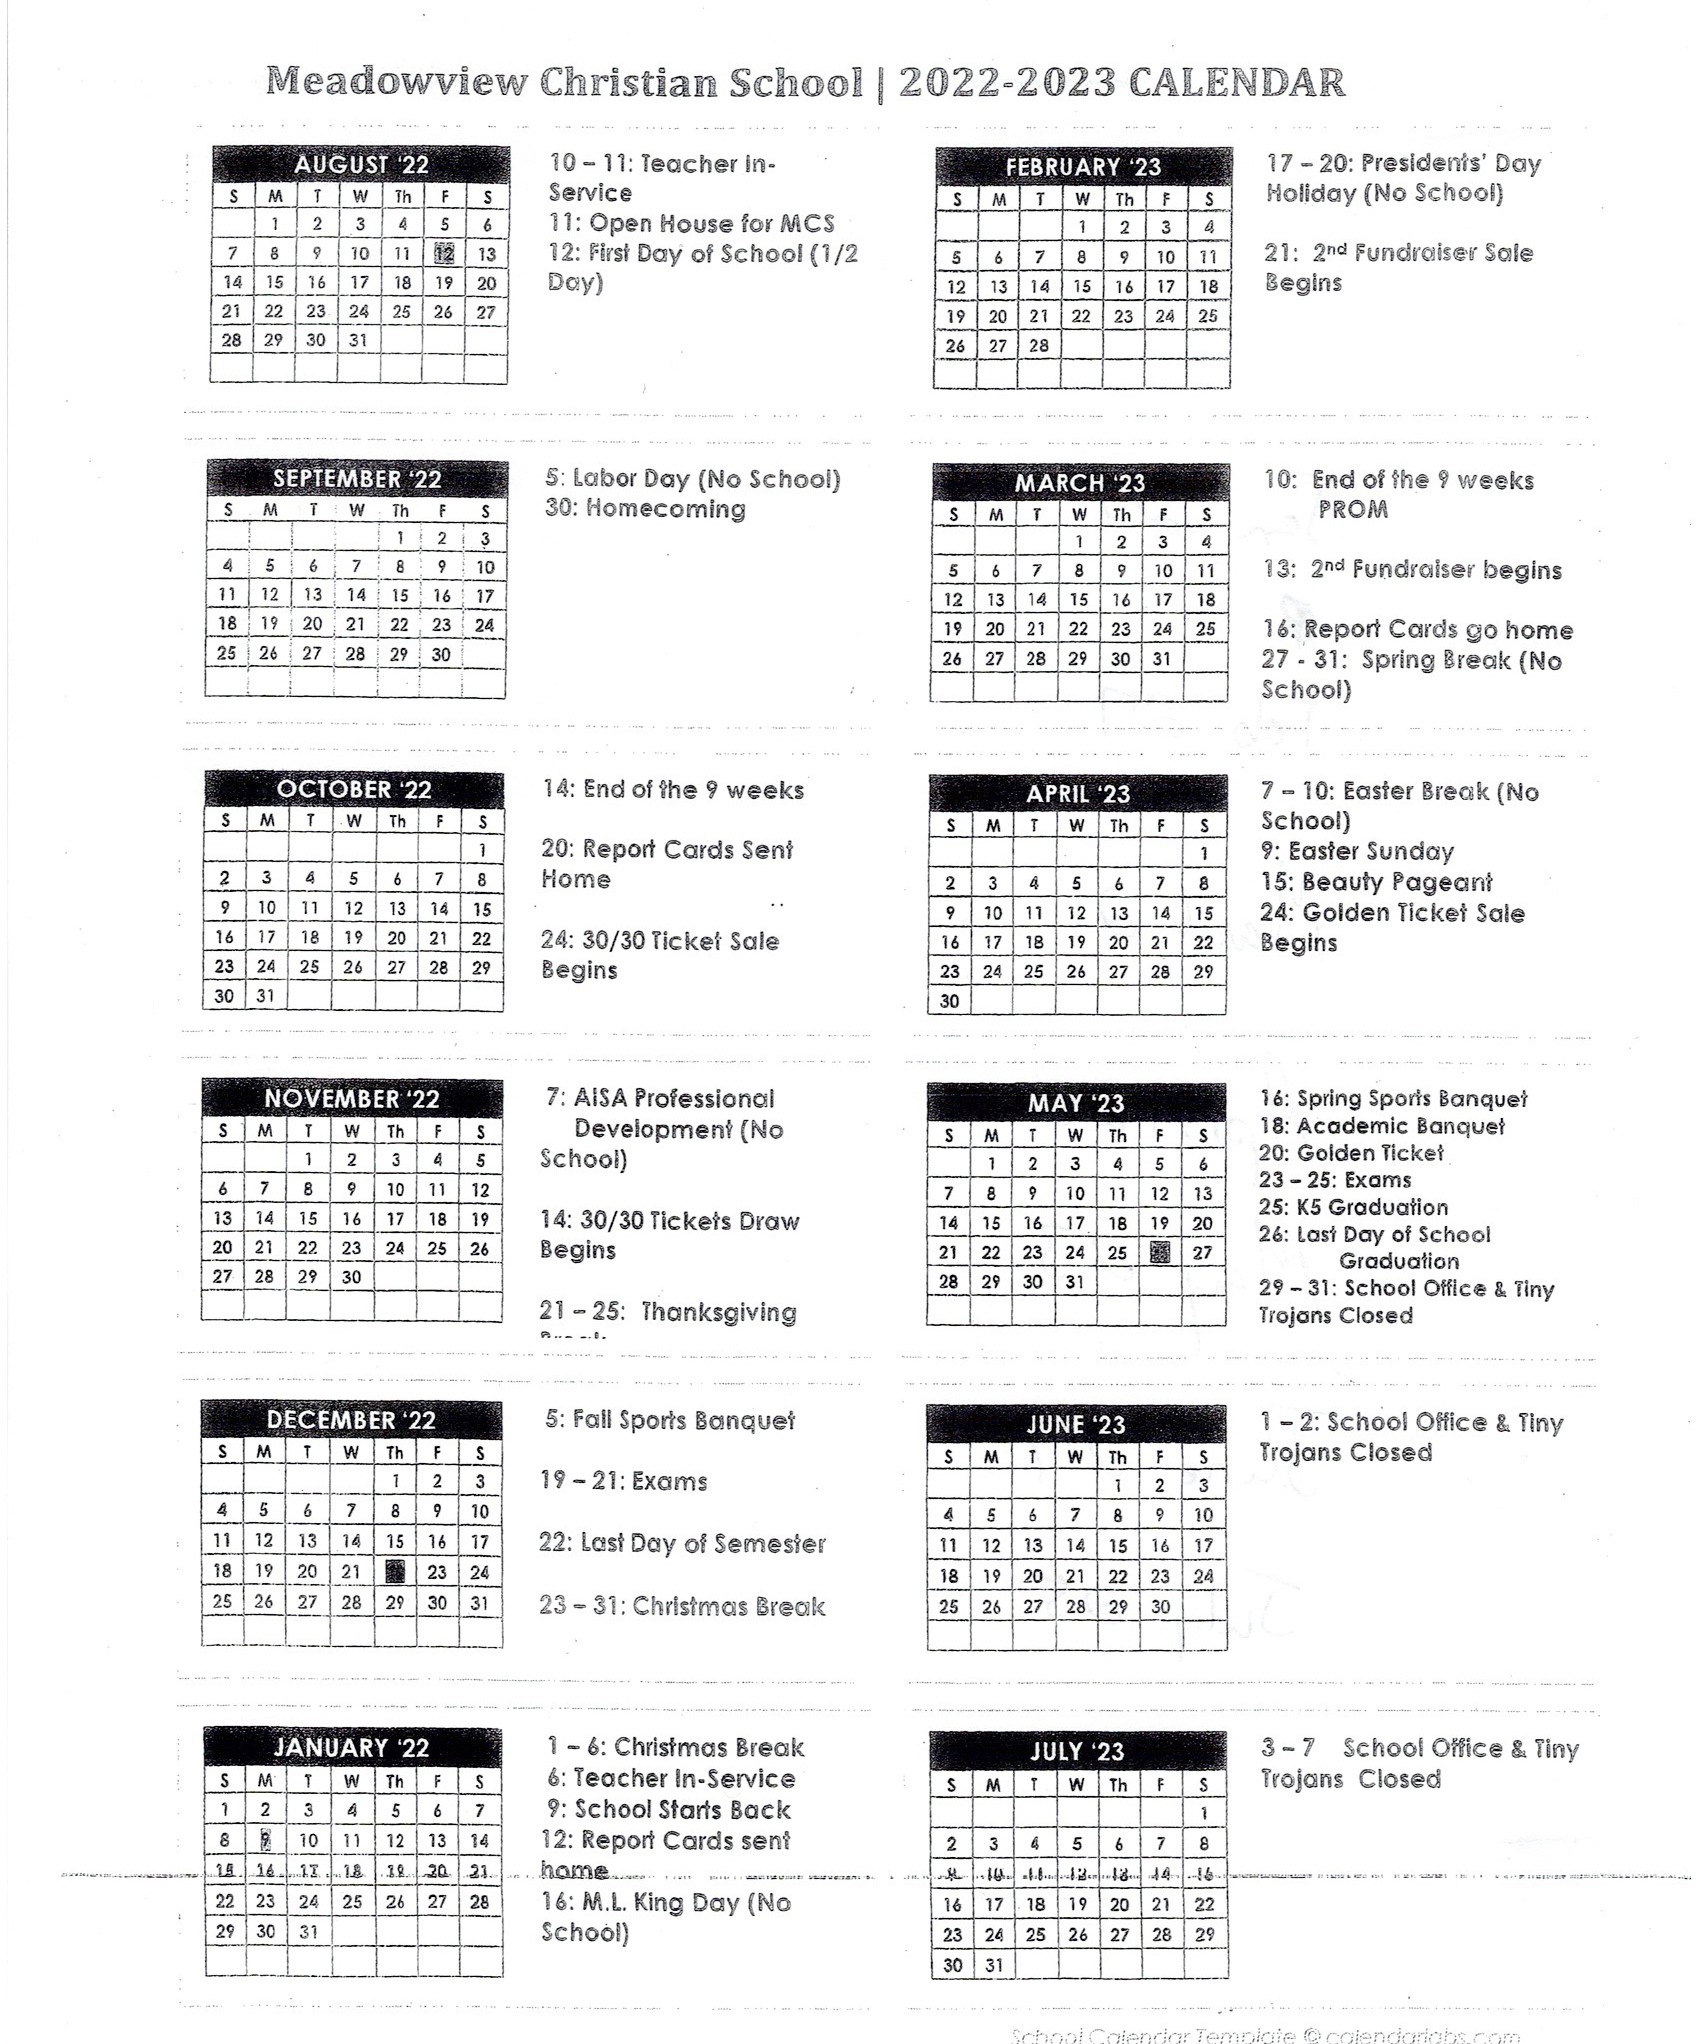 meadowview-christian-school-calendar